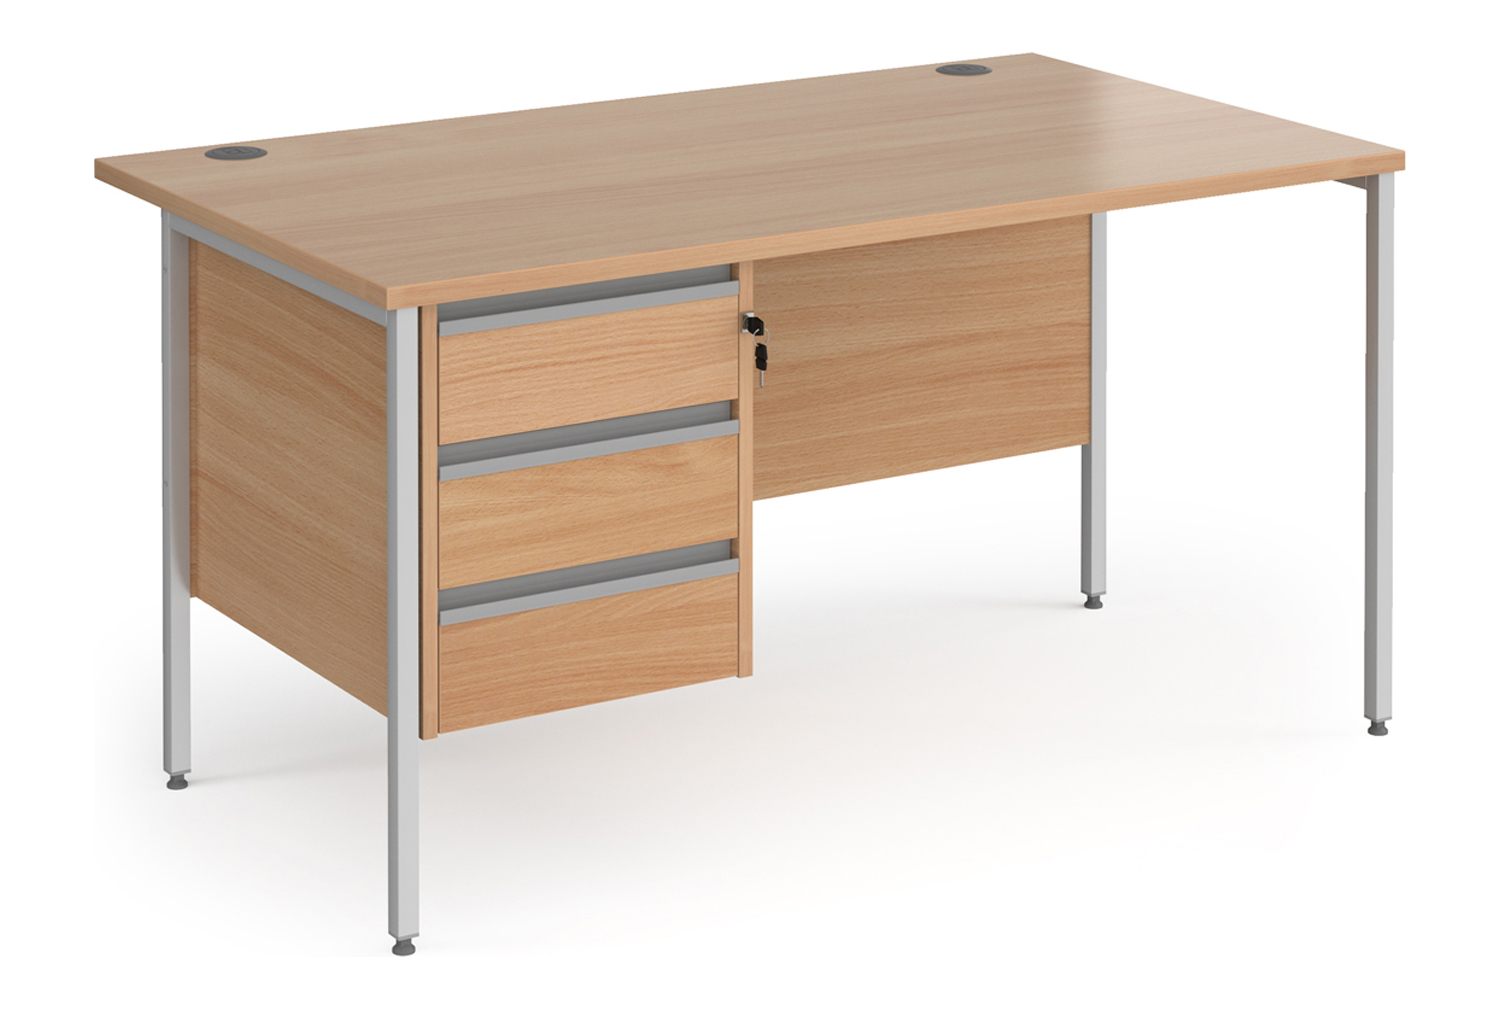 Value Line Classic+ Rectangular H-Leg Office Desk 3 Drawers (Silver Leg), 140wx80dx73h (cm), Beech, Express Delivery